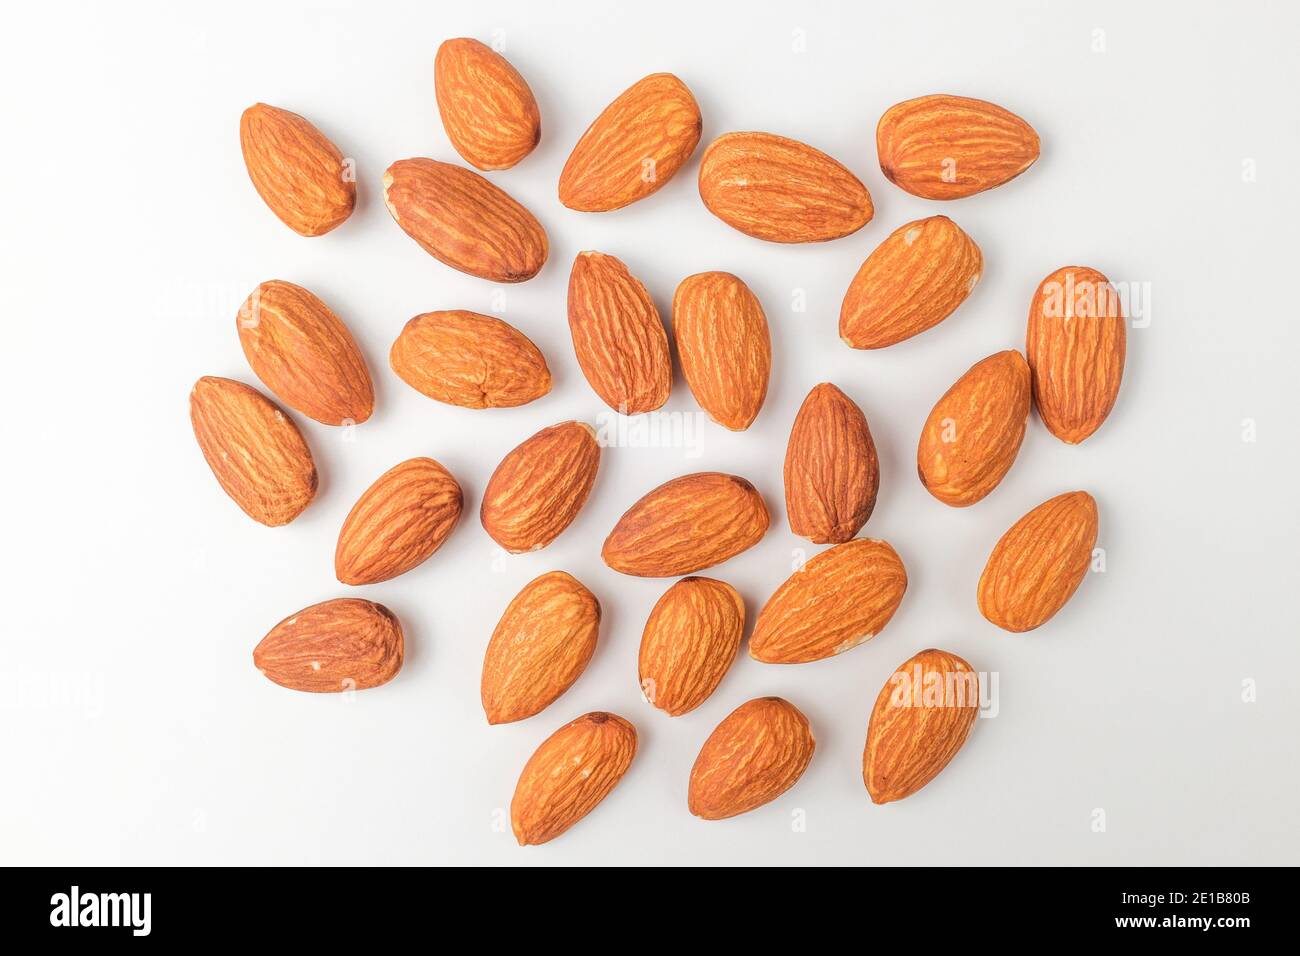 Savory almonds on white background Stock Photo